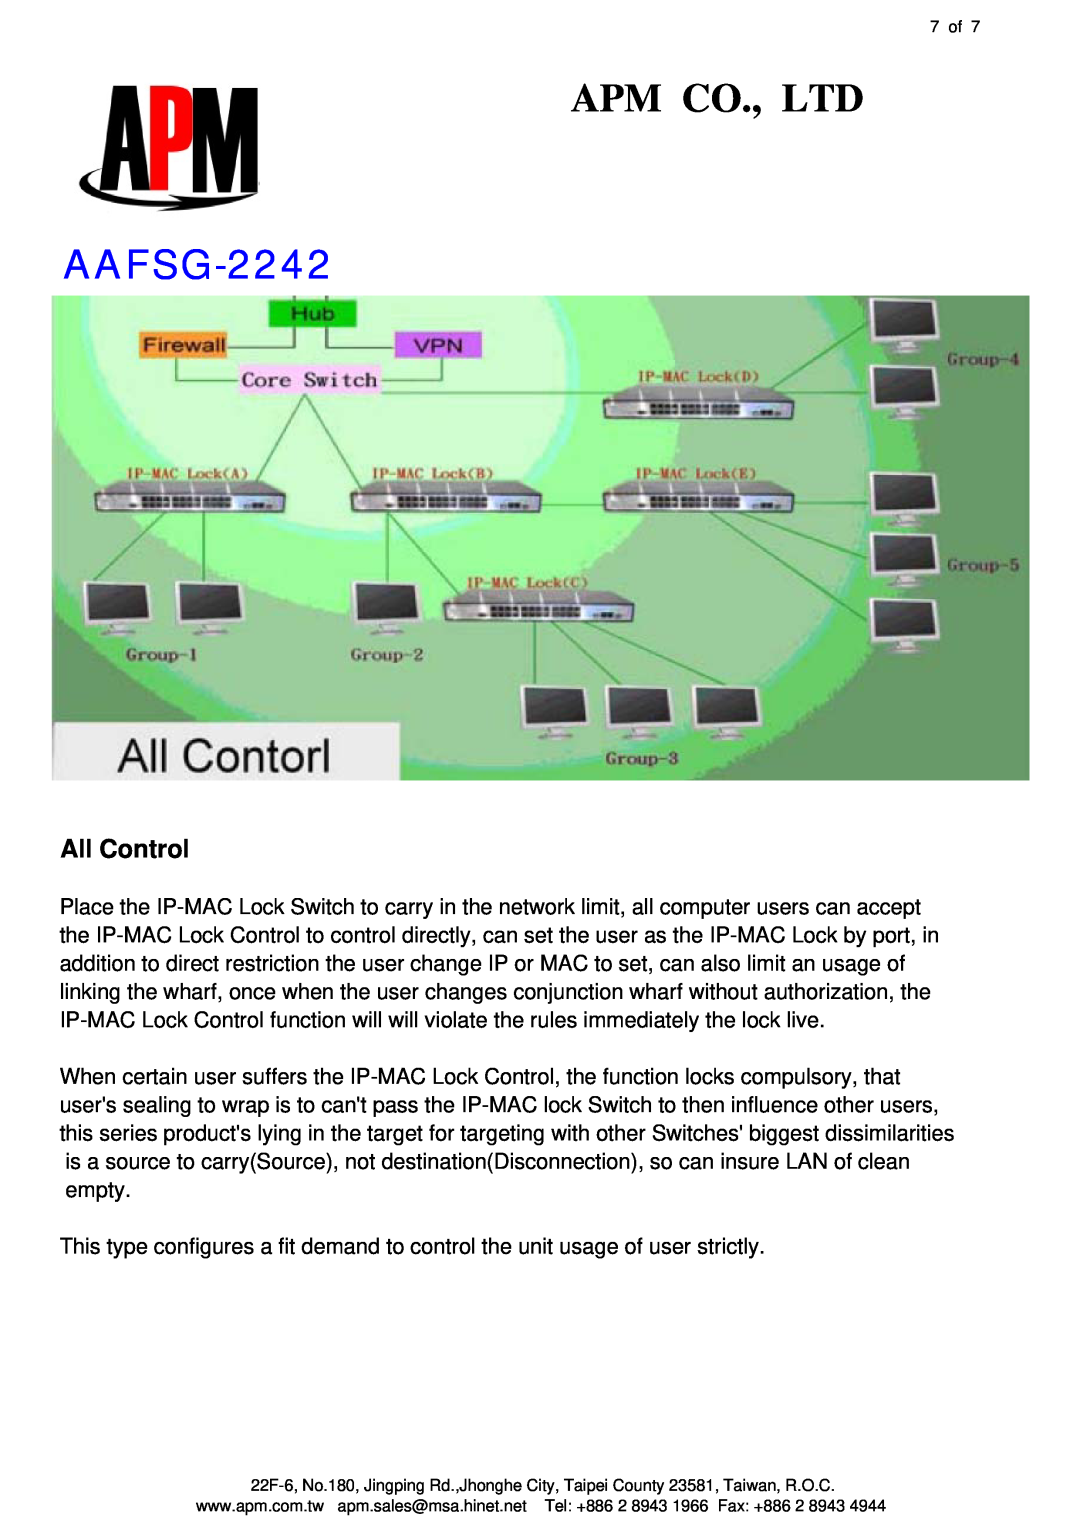 APM AAFSG-2242 manual All Control, 7 of 